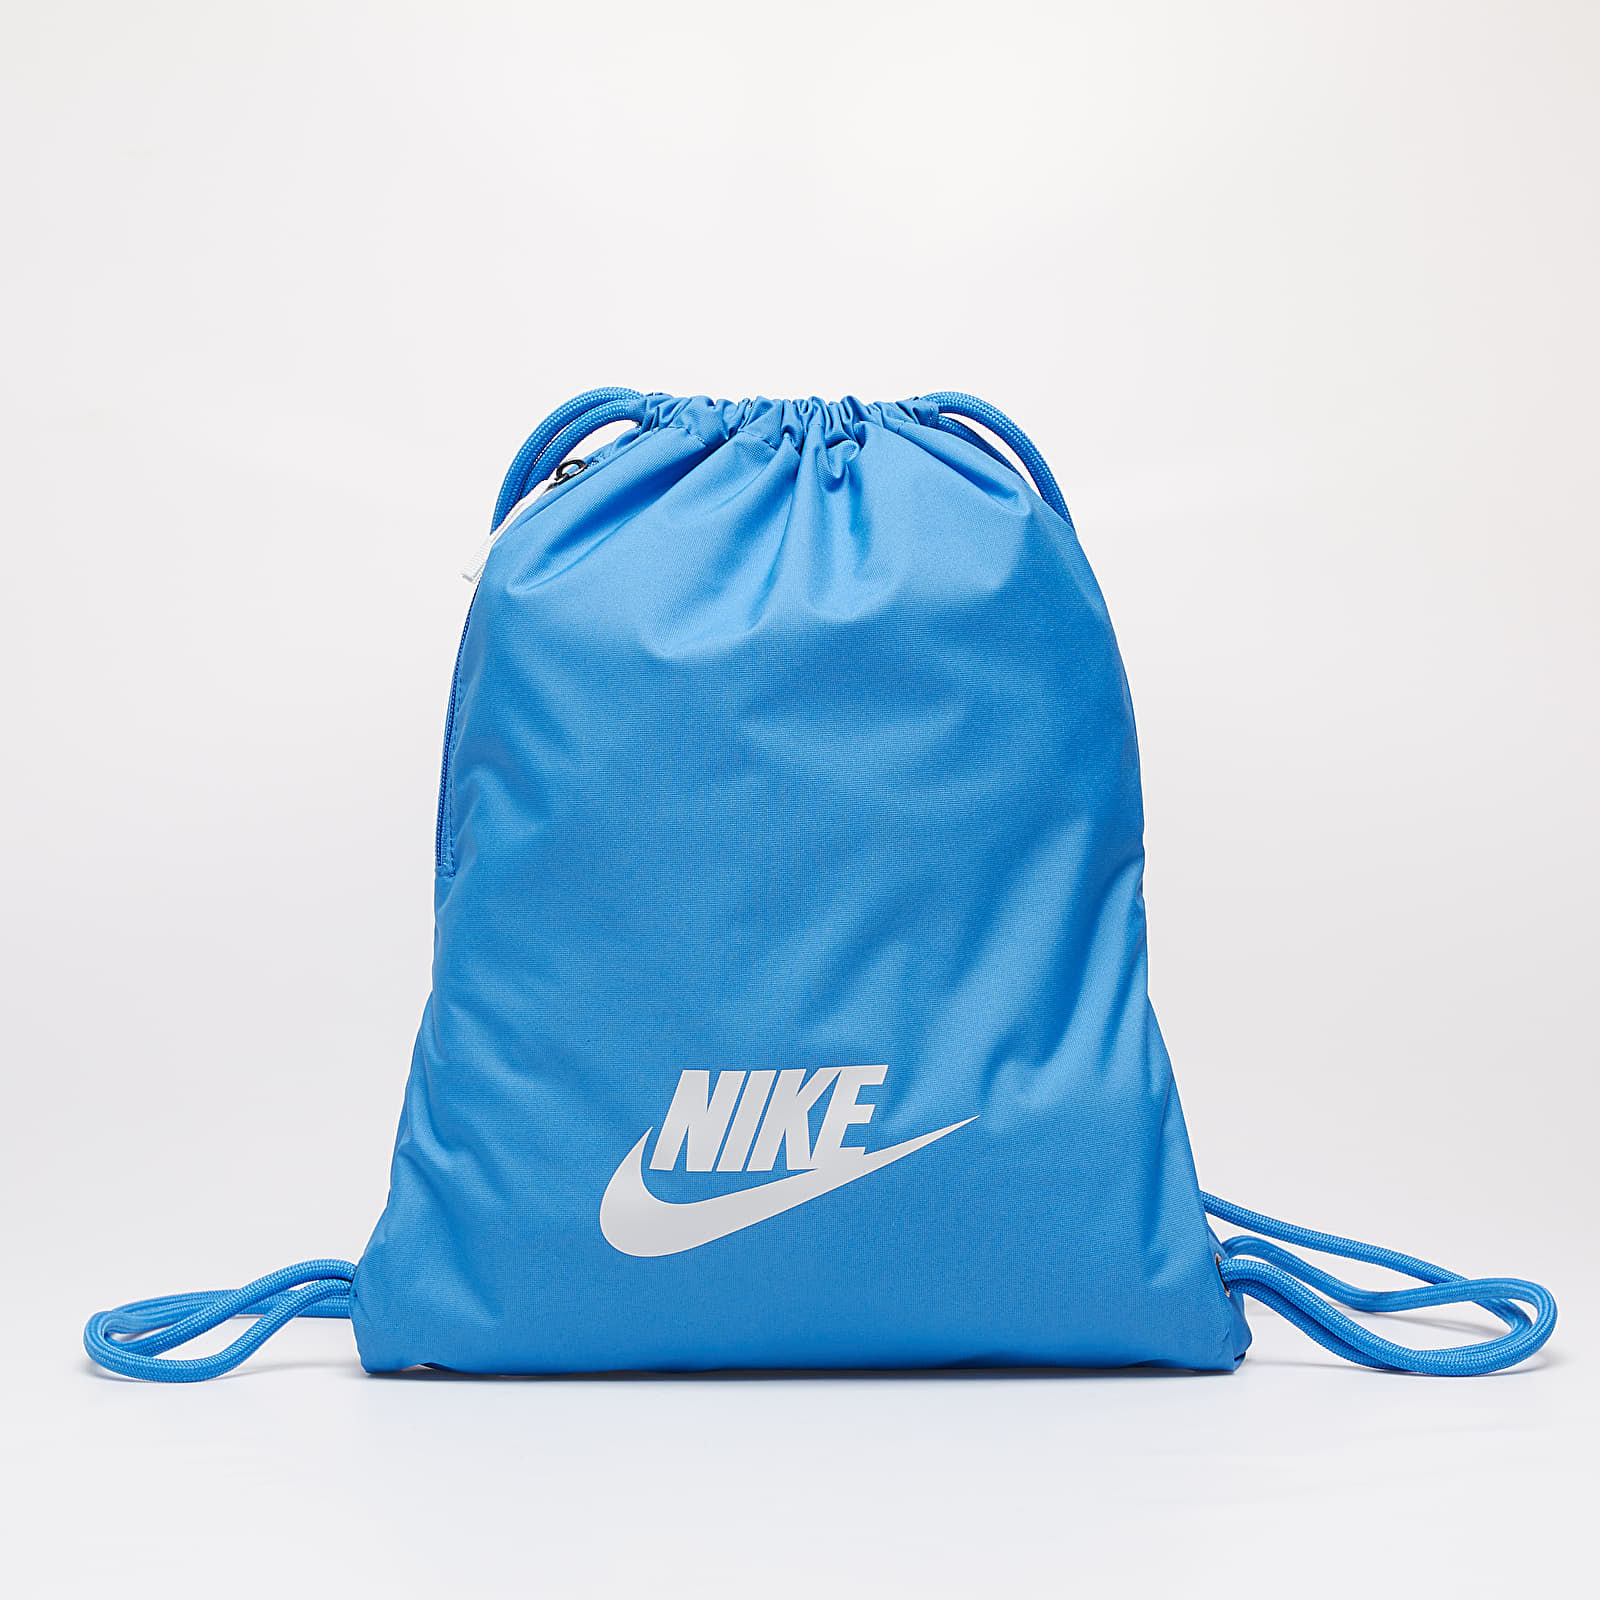 Plecaki Nike Heritage Gymsack - 2.0 Pacific Blue/ Pacific Blue/ Photon Dust